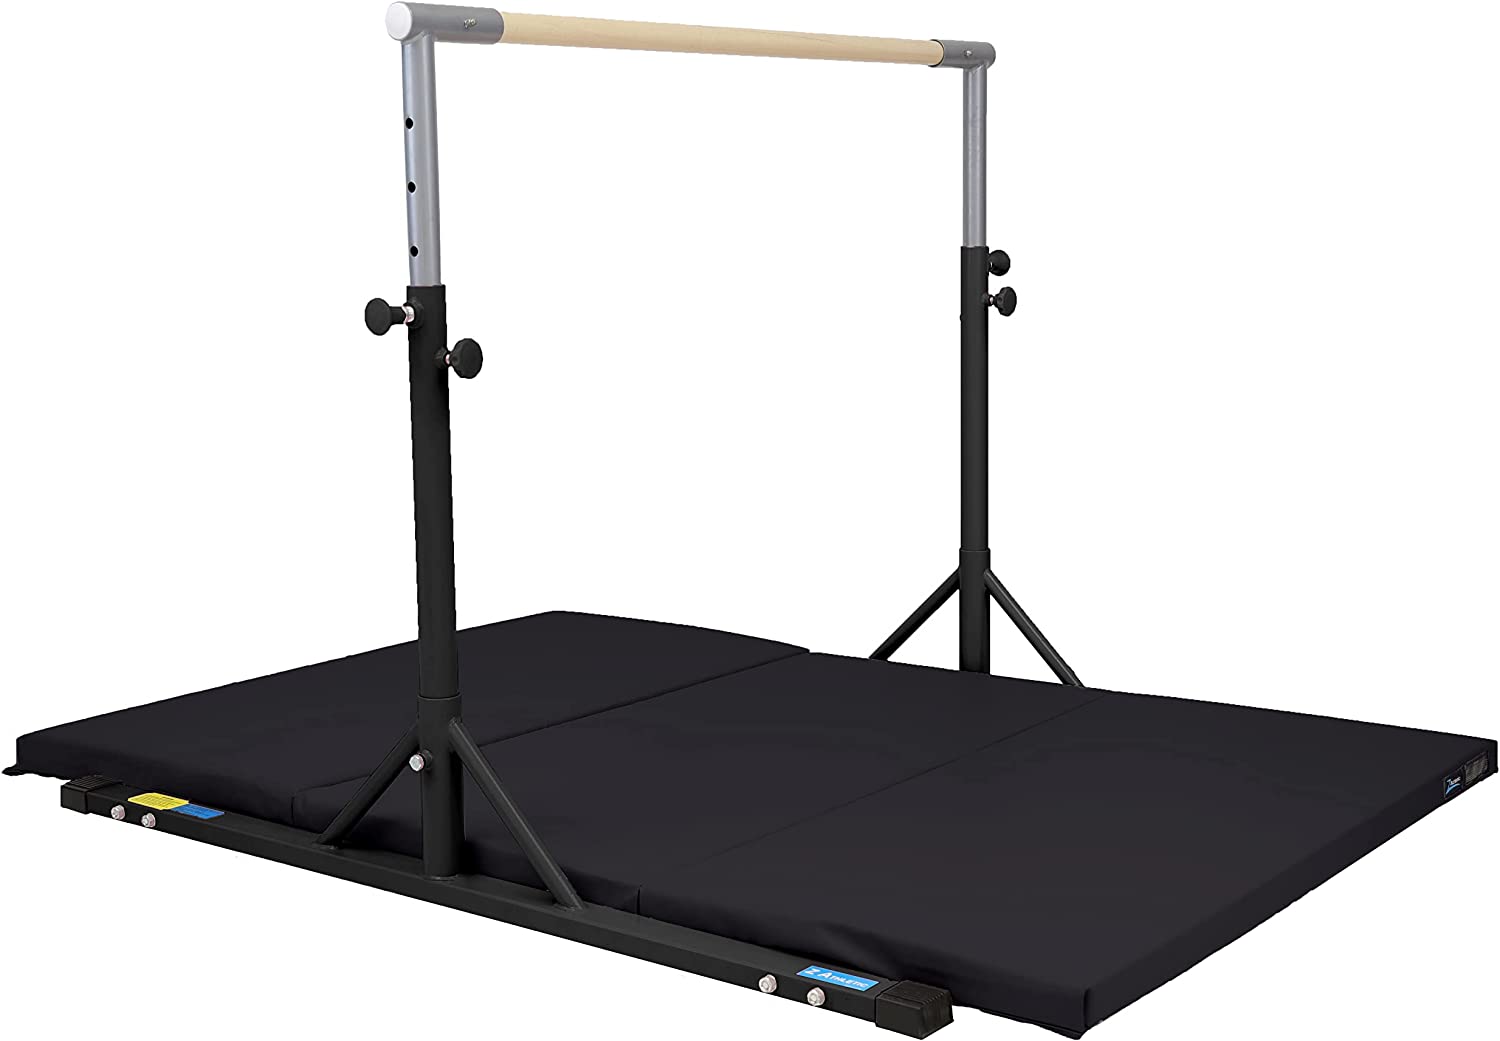 Z ATHLETIC Expandable Adjustable Home Training Gymnastics Kip Bar